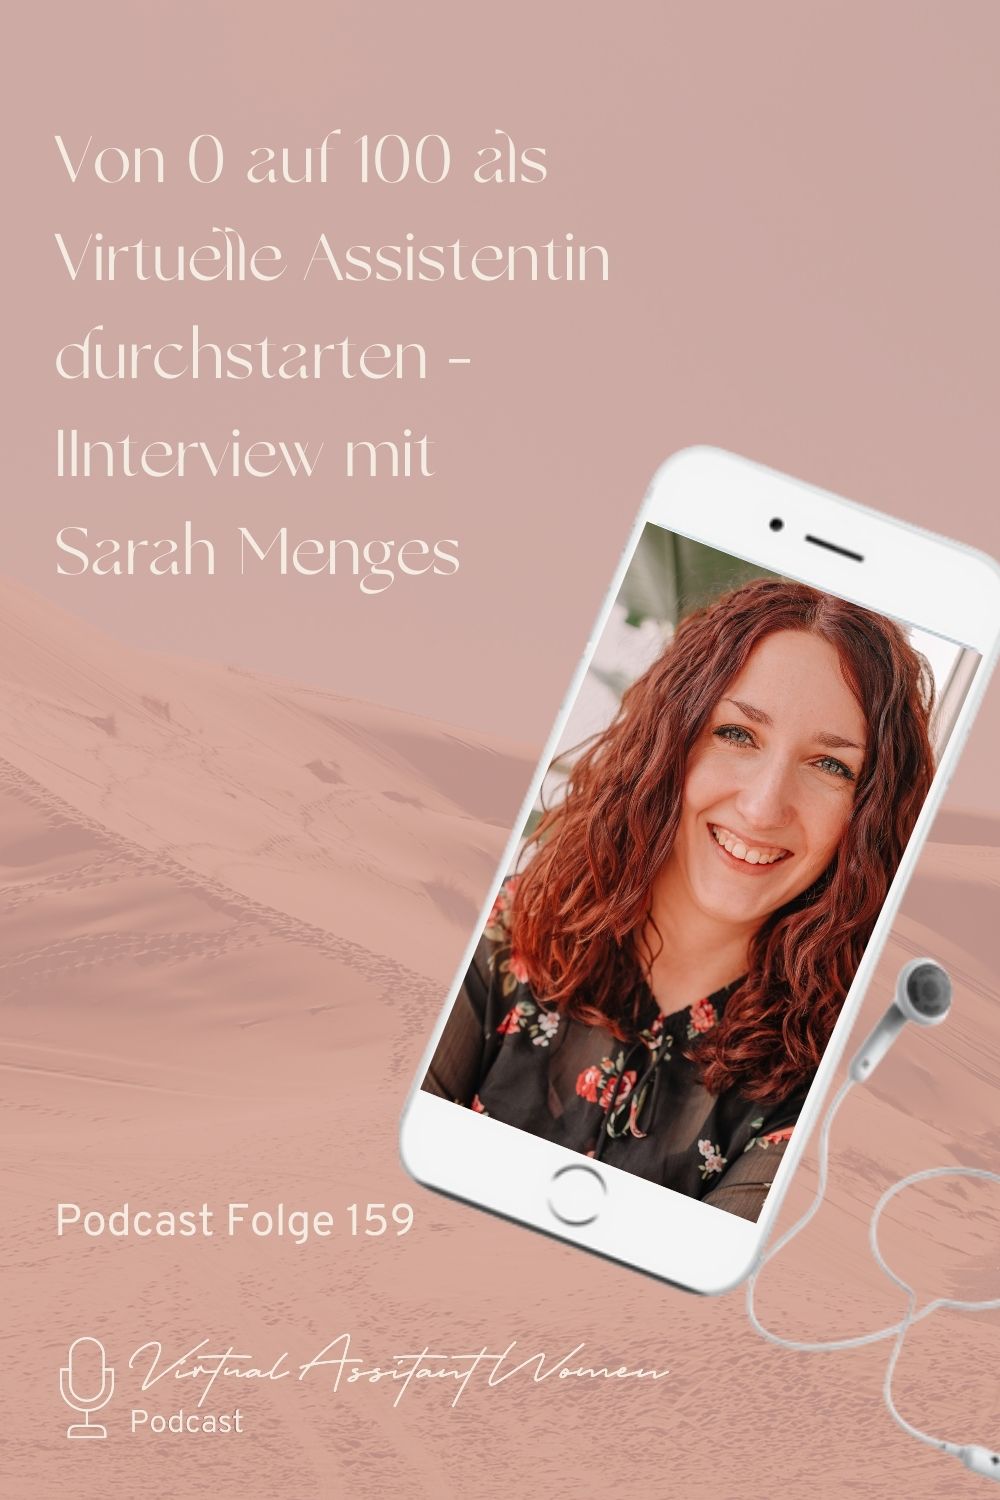 Pinterest Podcastfolge 159 Sarah Menges - virtuelle Assistentin durchstarten